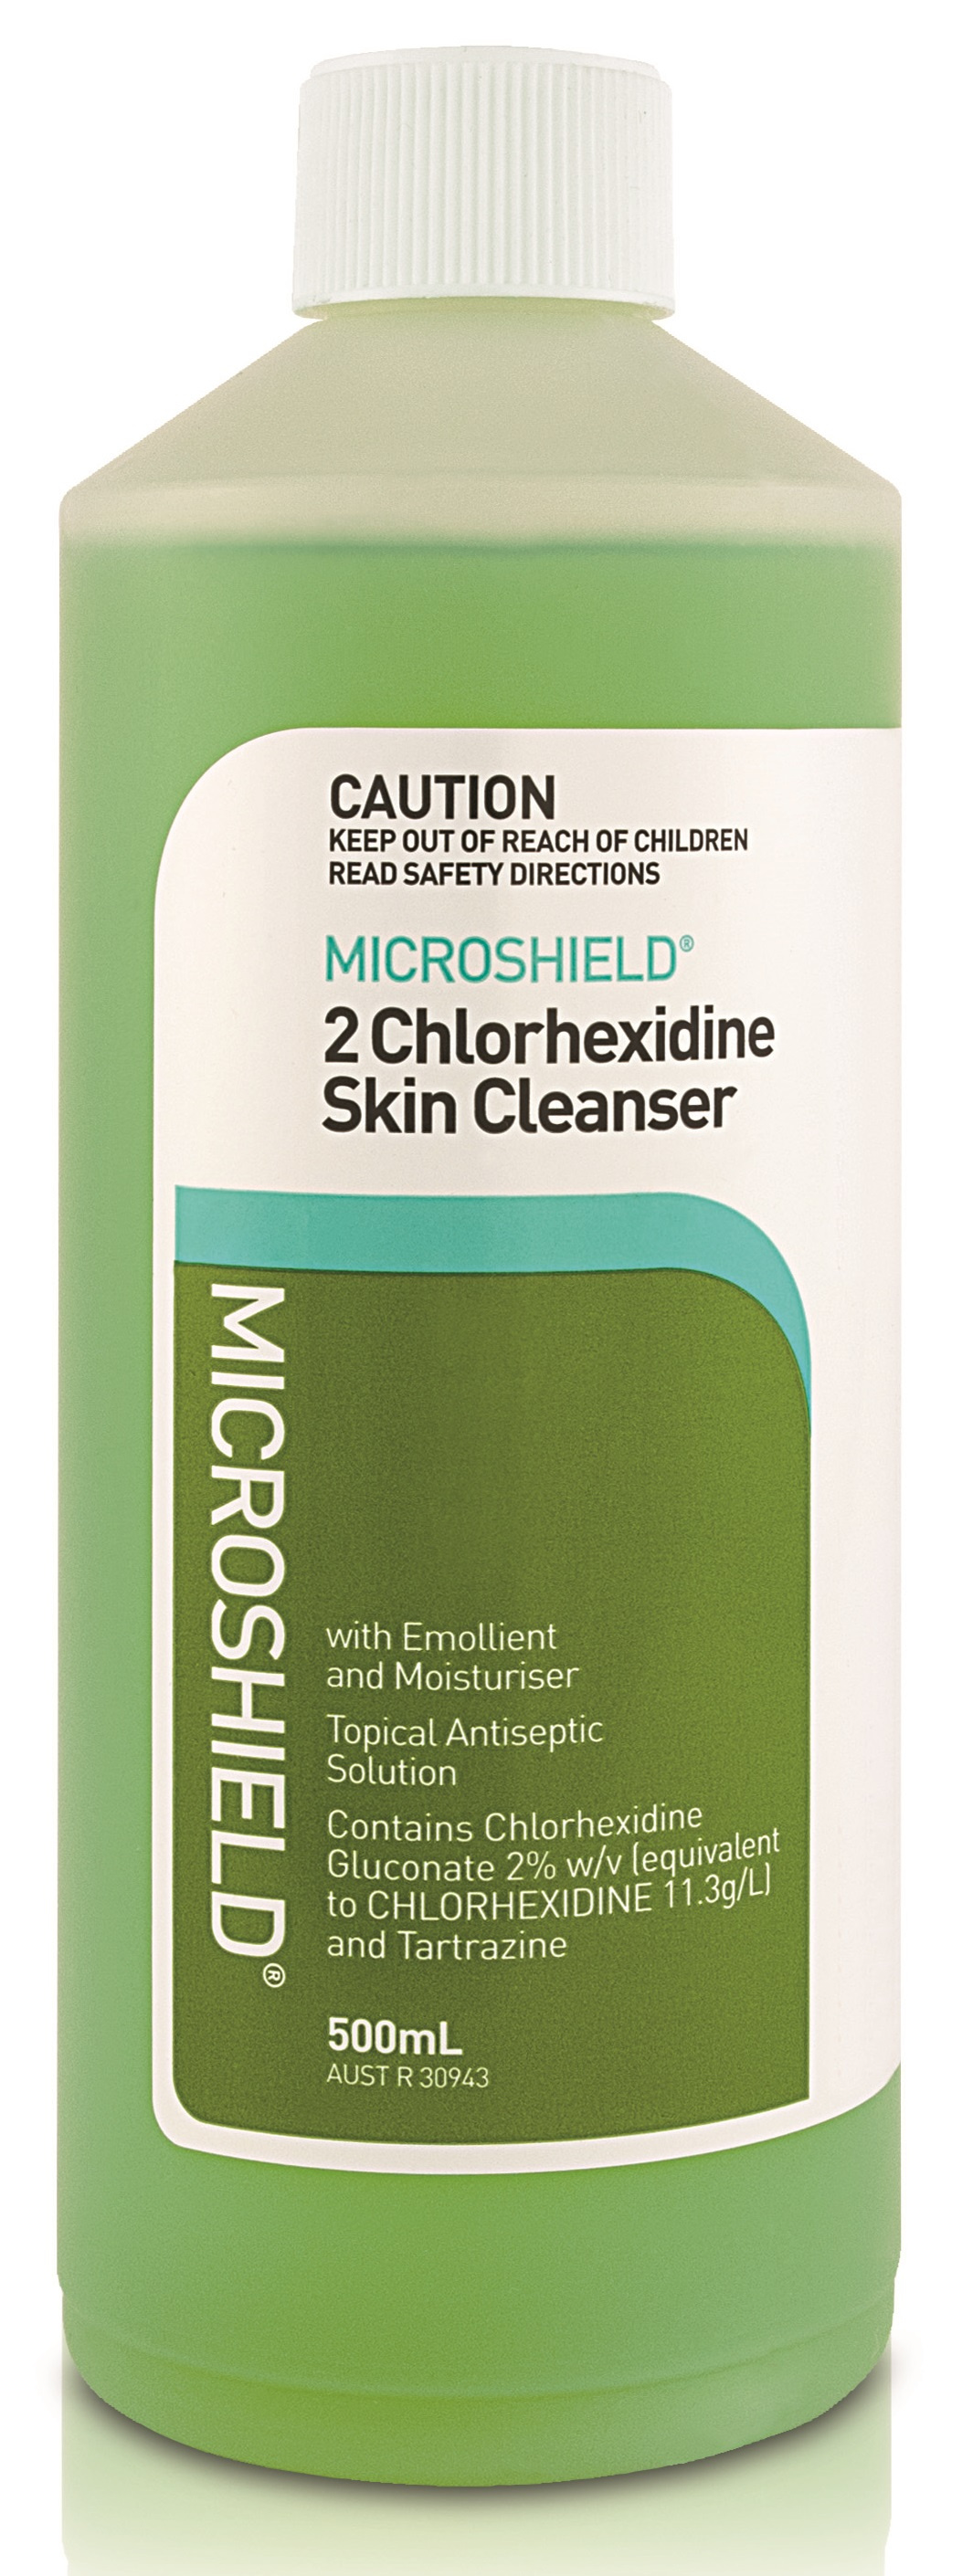 Microshield 2 Chlorhexidine Skin Cleanser 500ml image 0